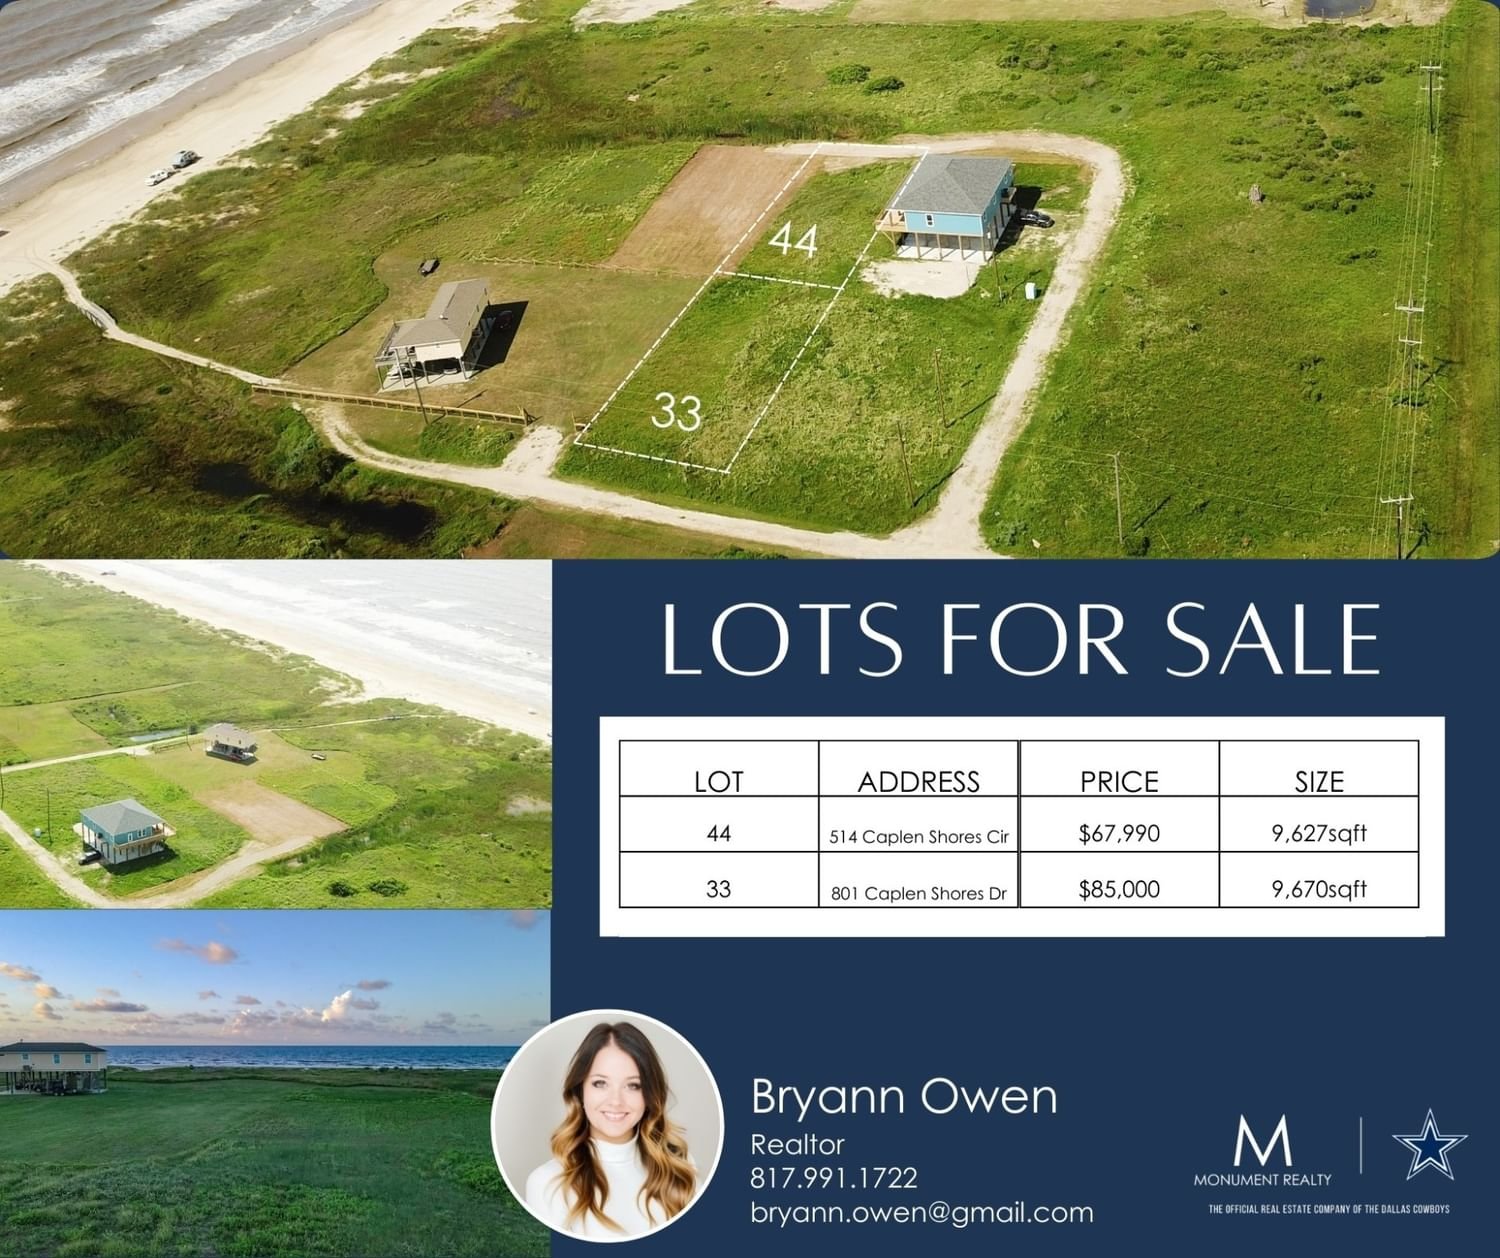 Real estate property located at 801 Caplen Shores, Galveston, Caplen Shores 87, Gilchrist, TX, US